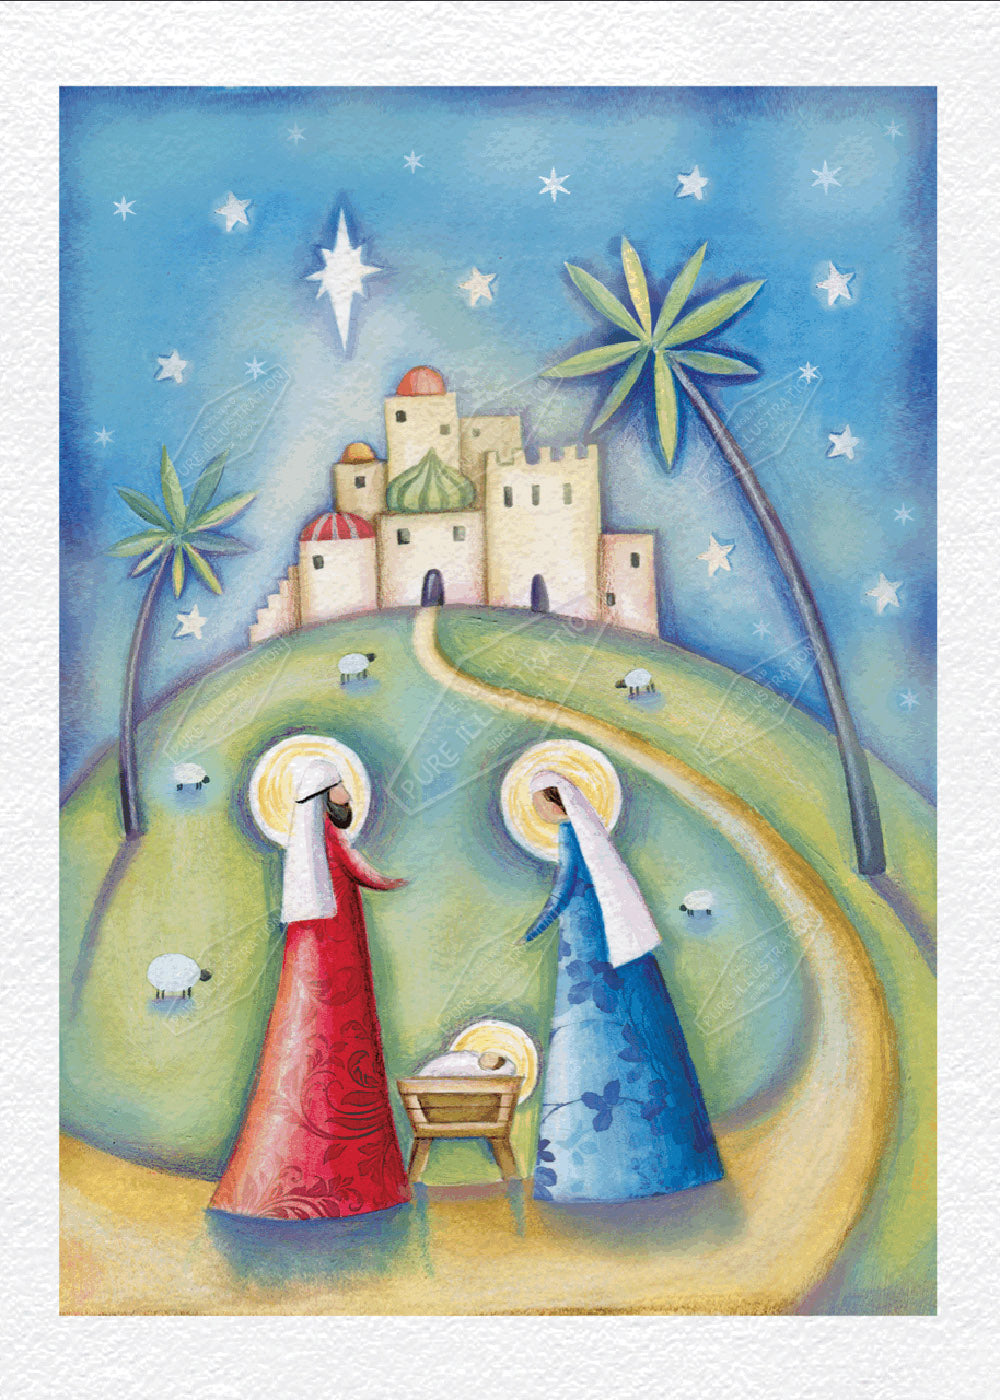 00033423DEV - Deva Evans is represented by Pure Art Licensing Agency - Christmas Greeting Card Design